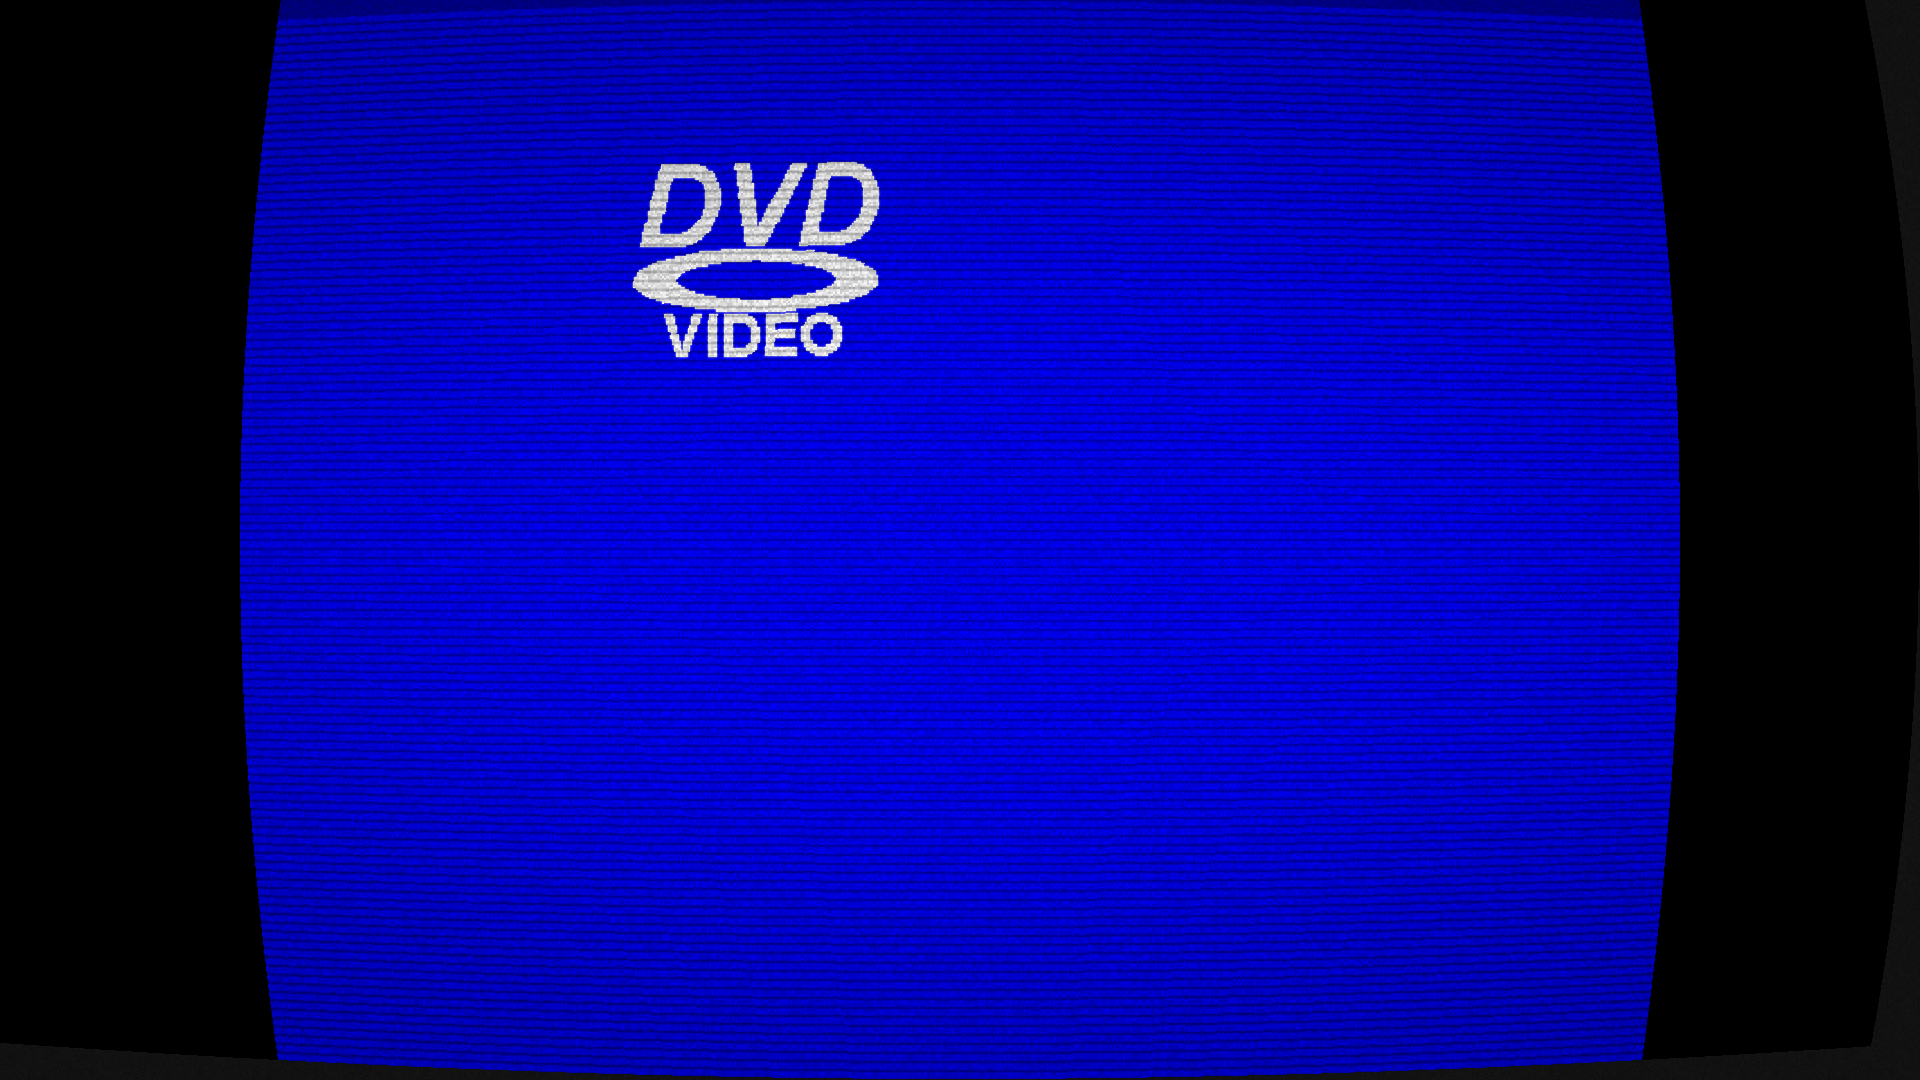 Ютуб в углу экрана. Заставка двд. Двд скринсейвер. Знак двд на телевизоре. Экран заставки DVD.